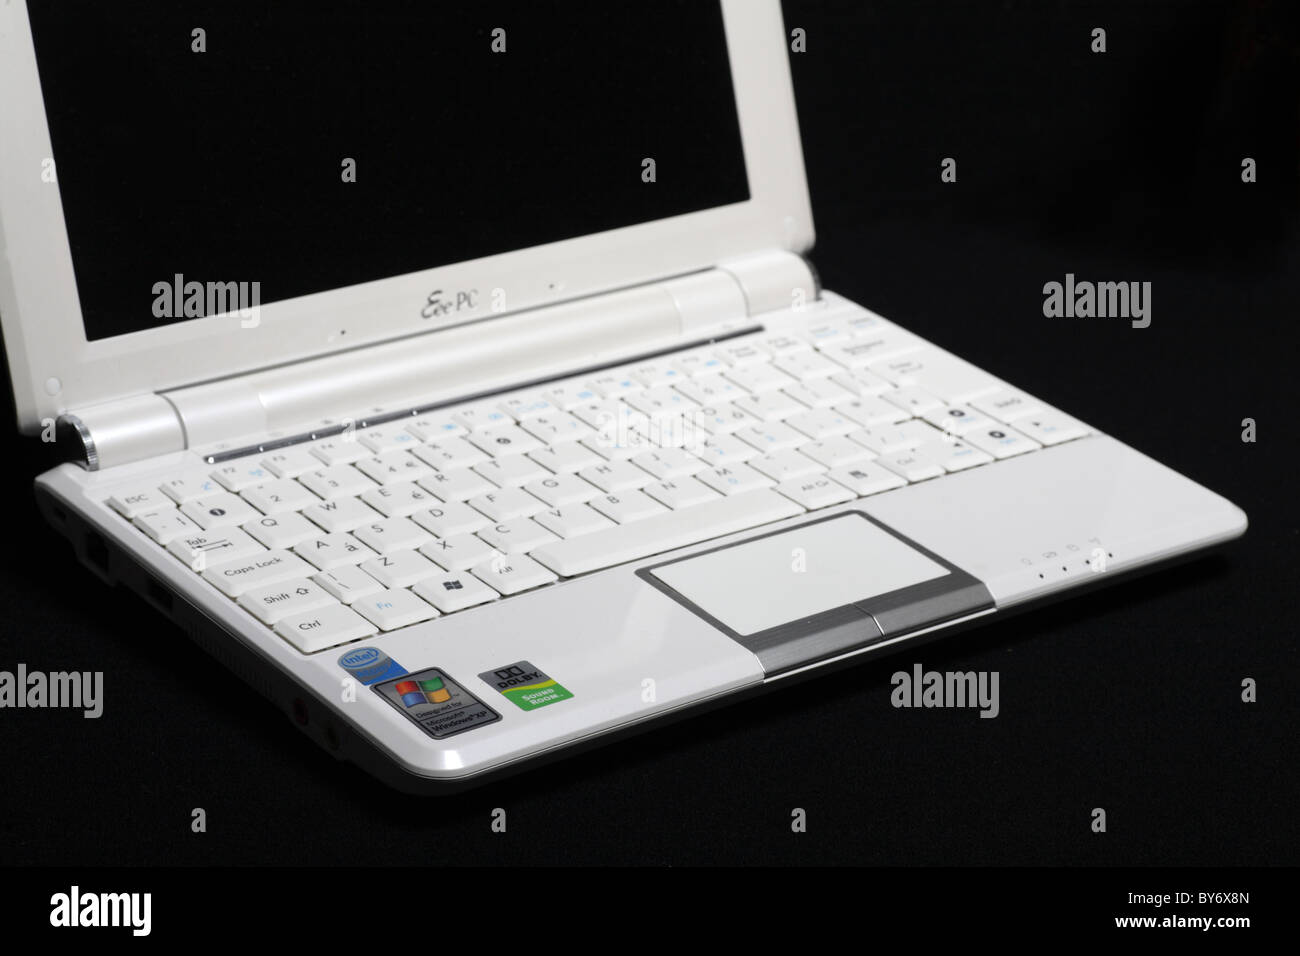 White Asus Eeepc 10 inch screen windows netbook mini laptop computer PC  isolated on black Stock Photo - Alamy